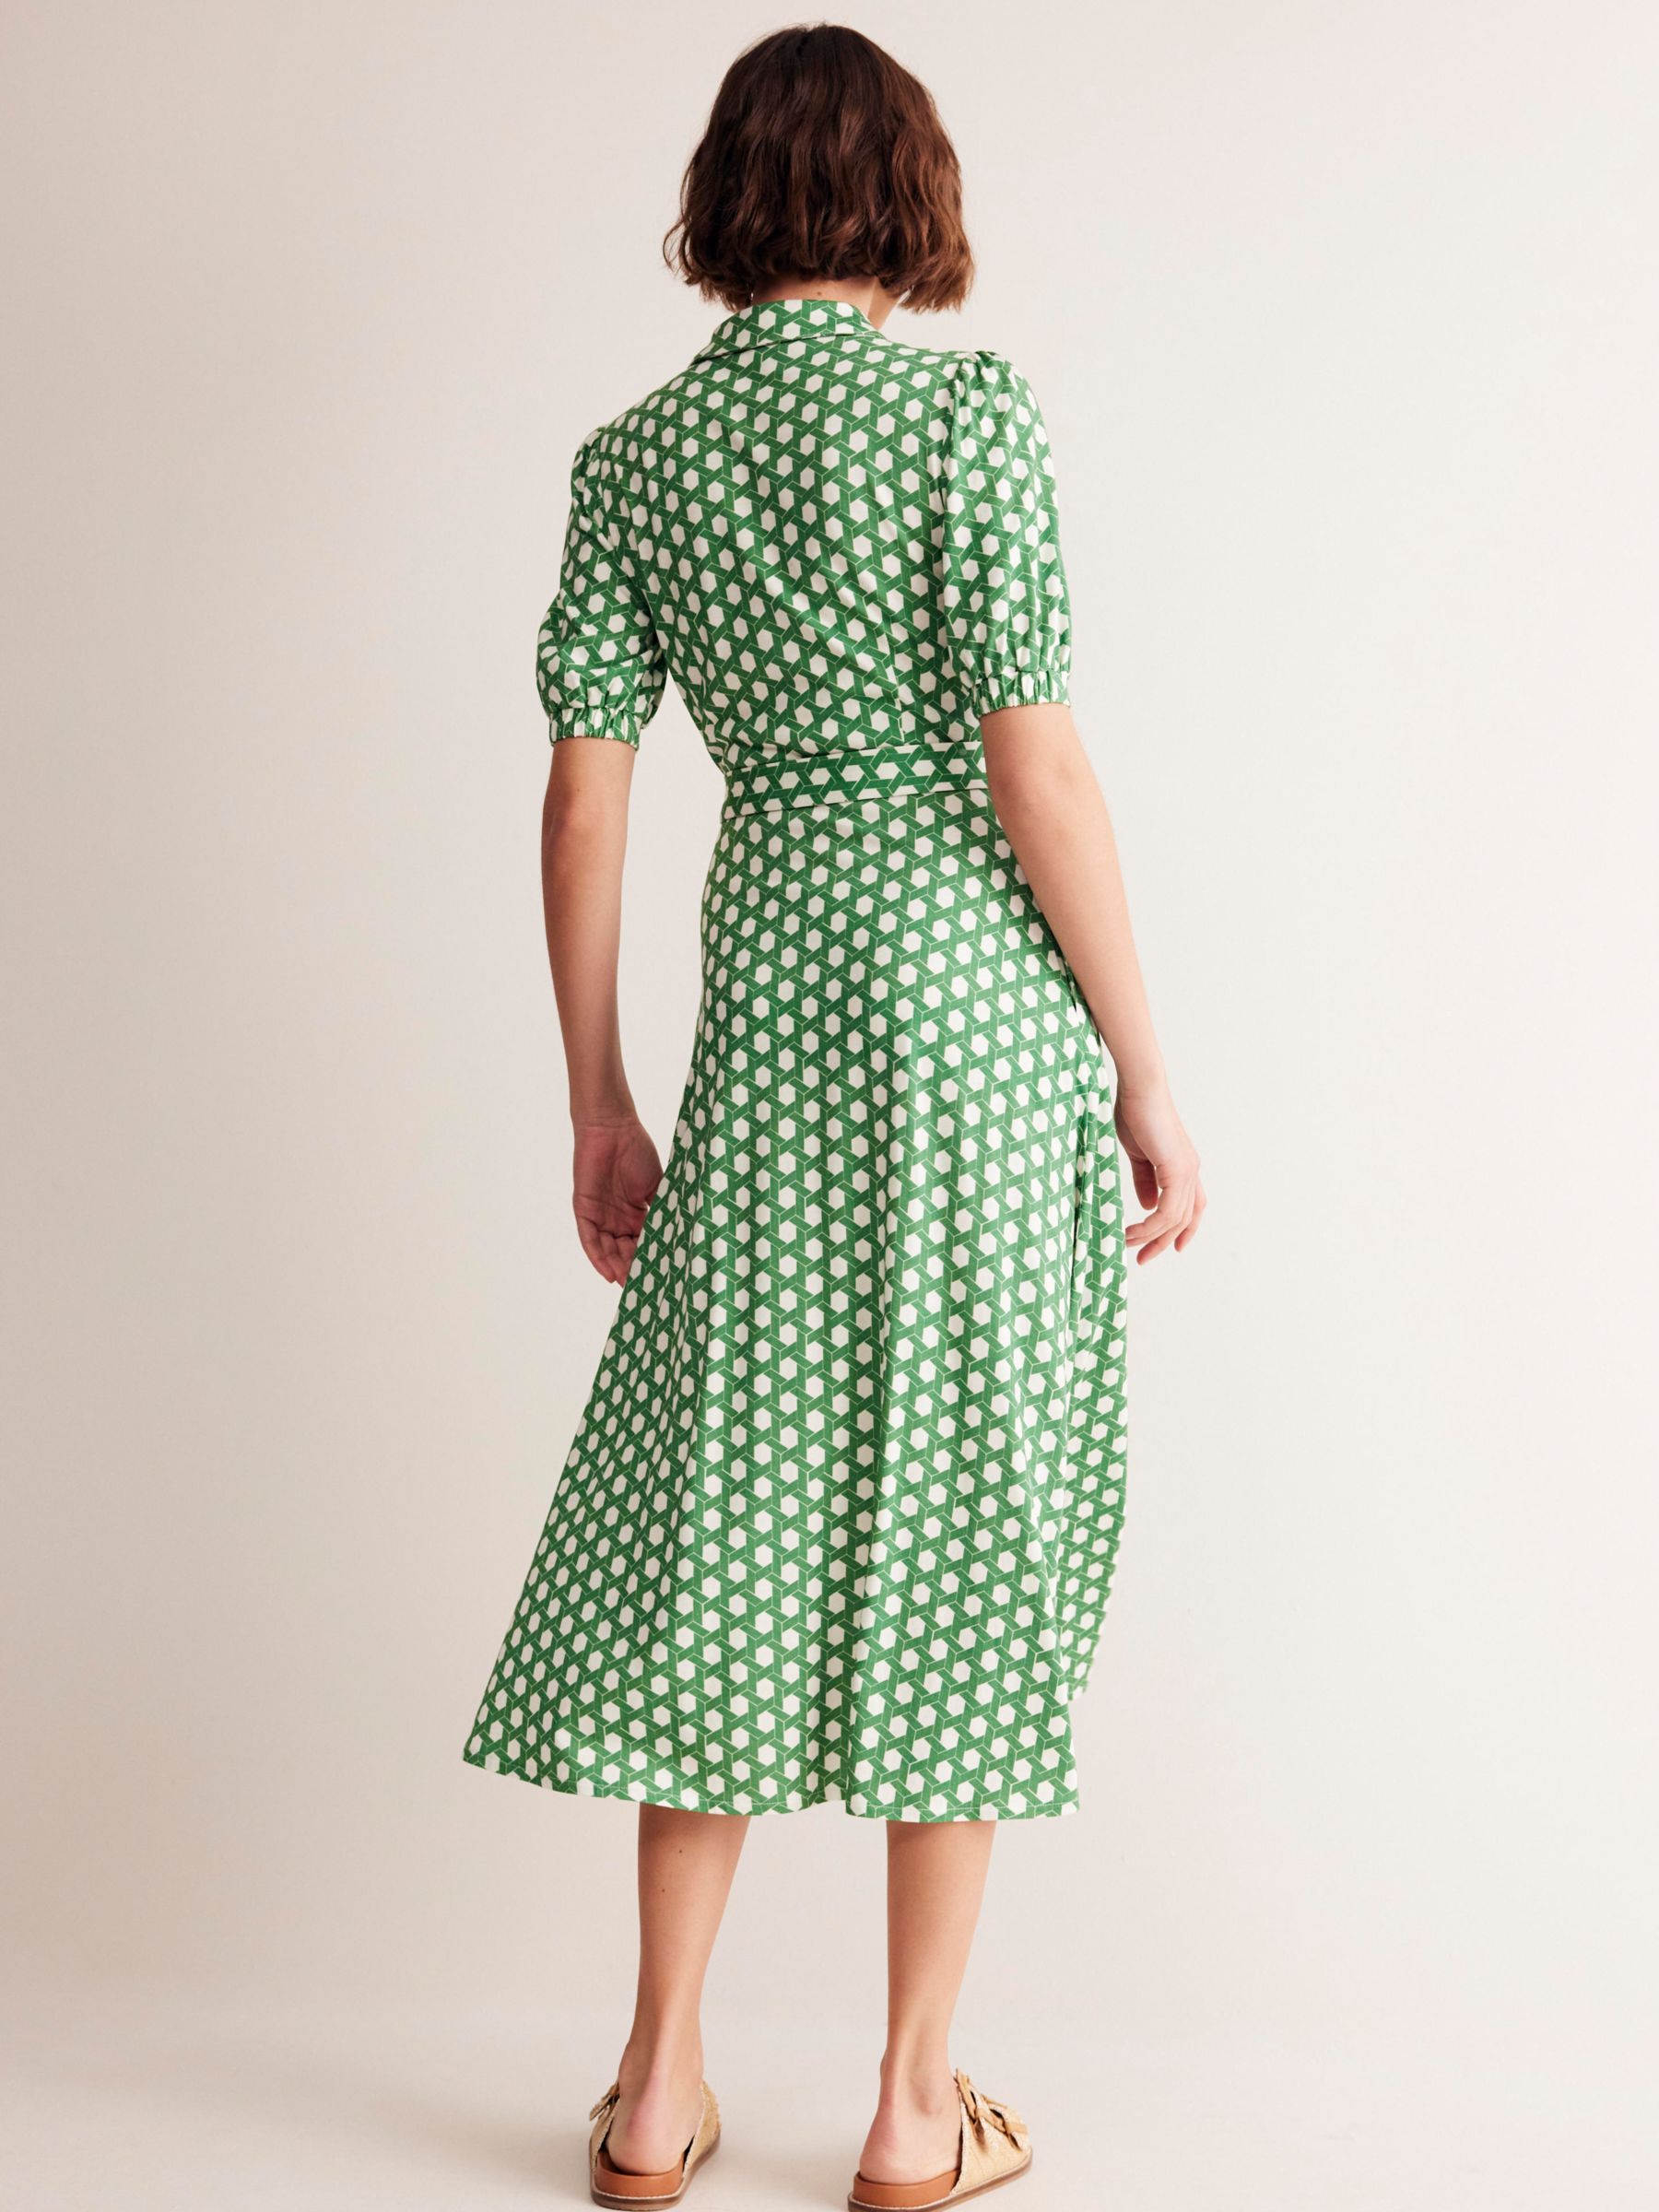 Boden Libby Honeycomb Geometric Jersey Dress, Green, 8